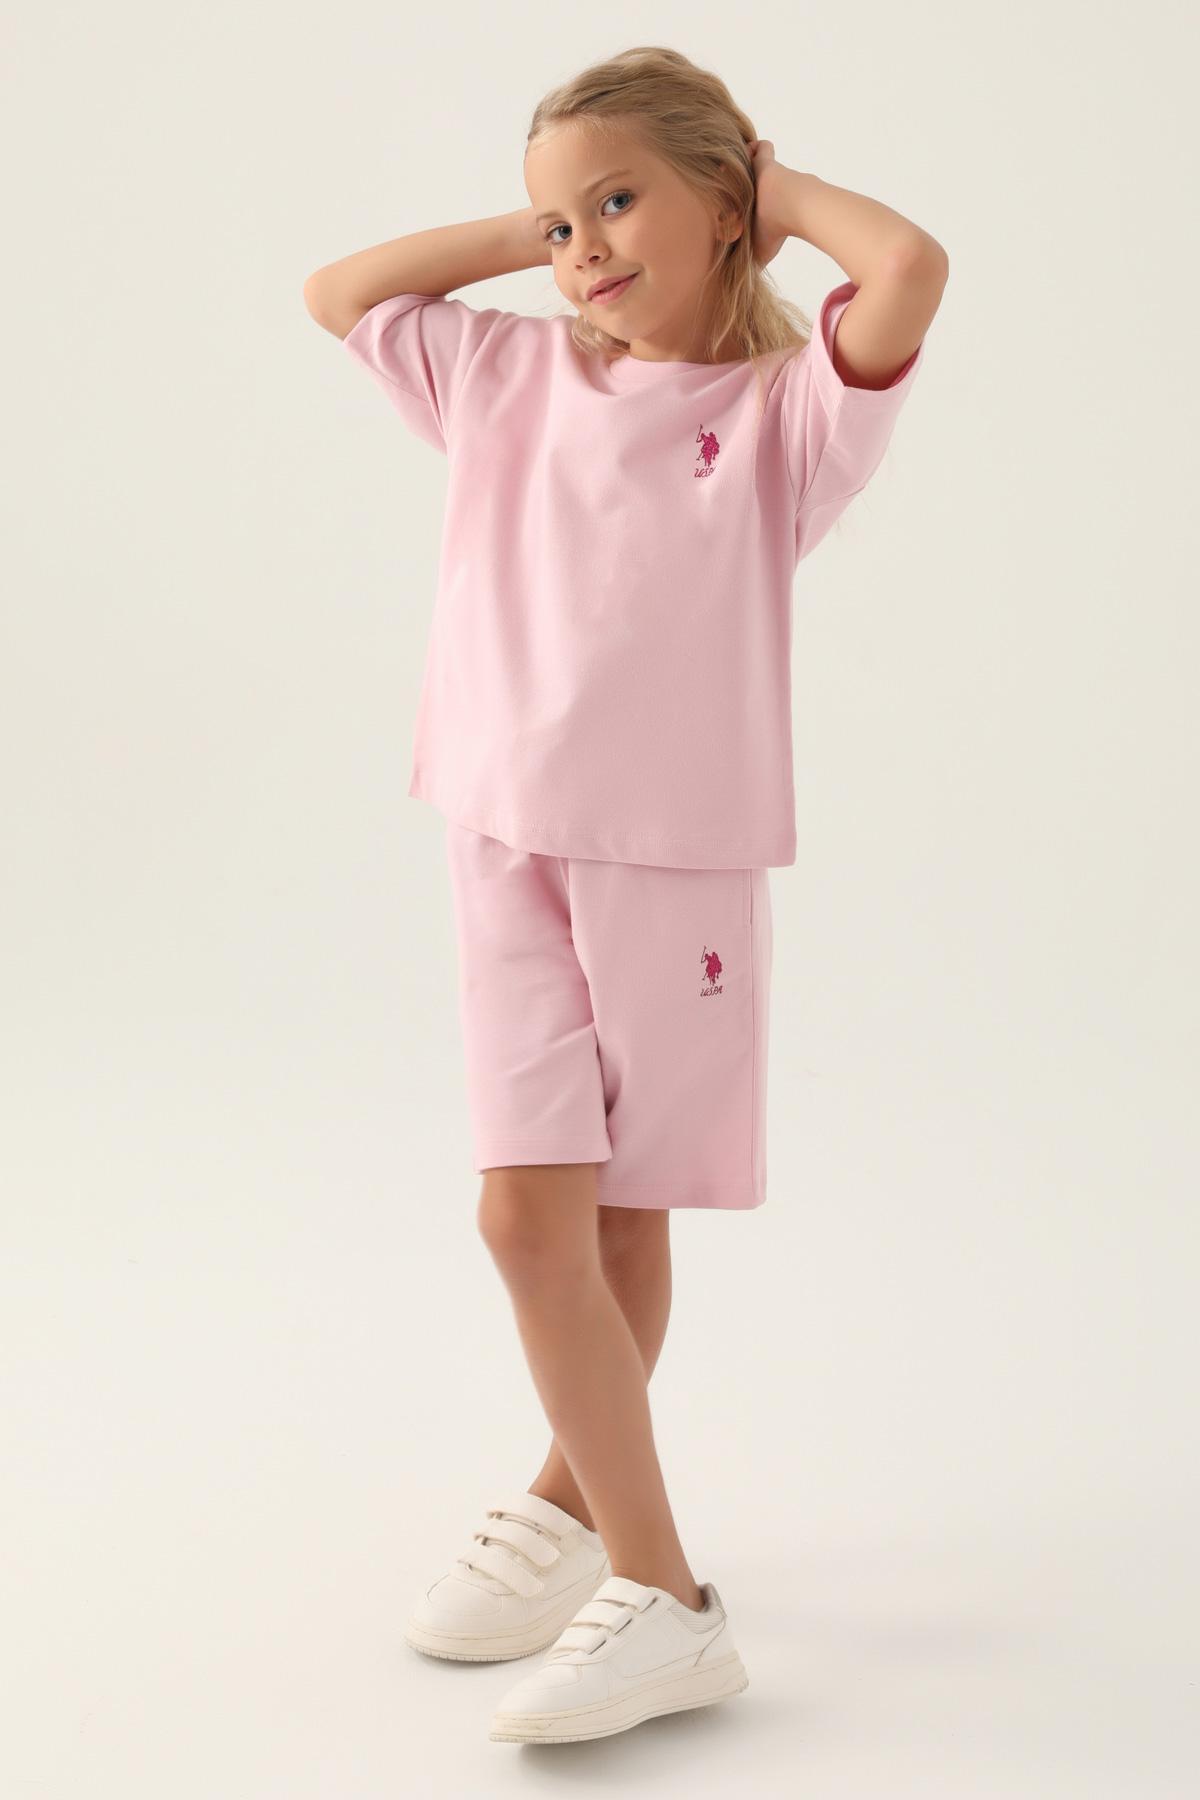 Selected image for U.S. Polo Assn. Komplet za devojčice US1822-4, Roze